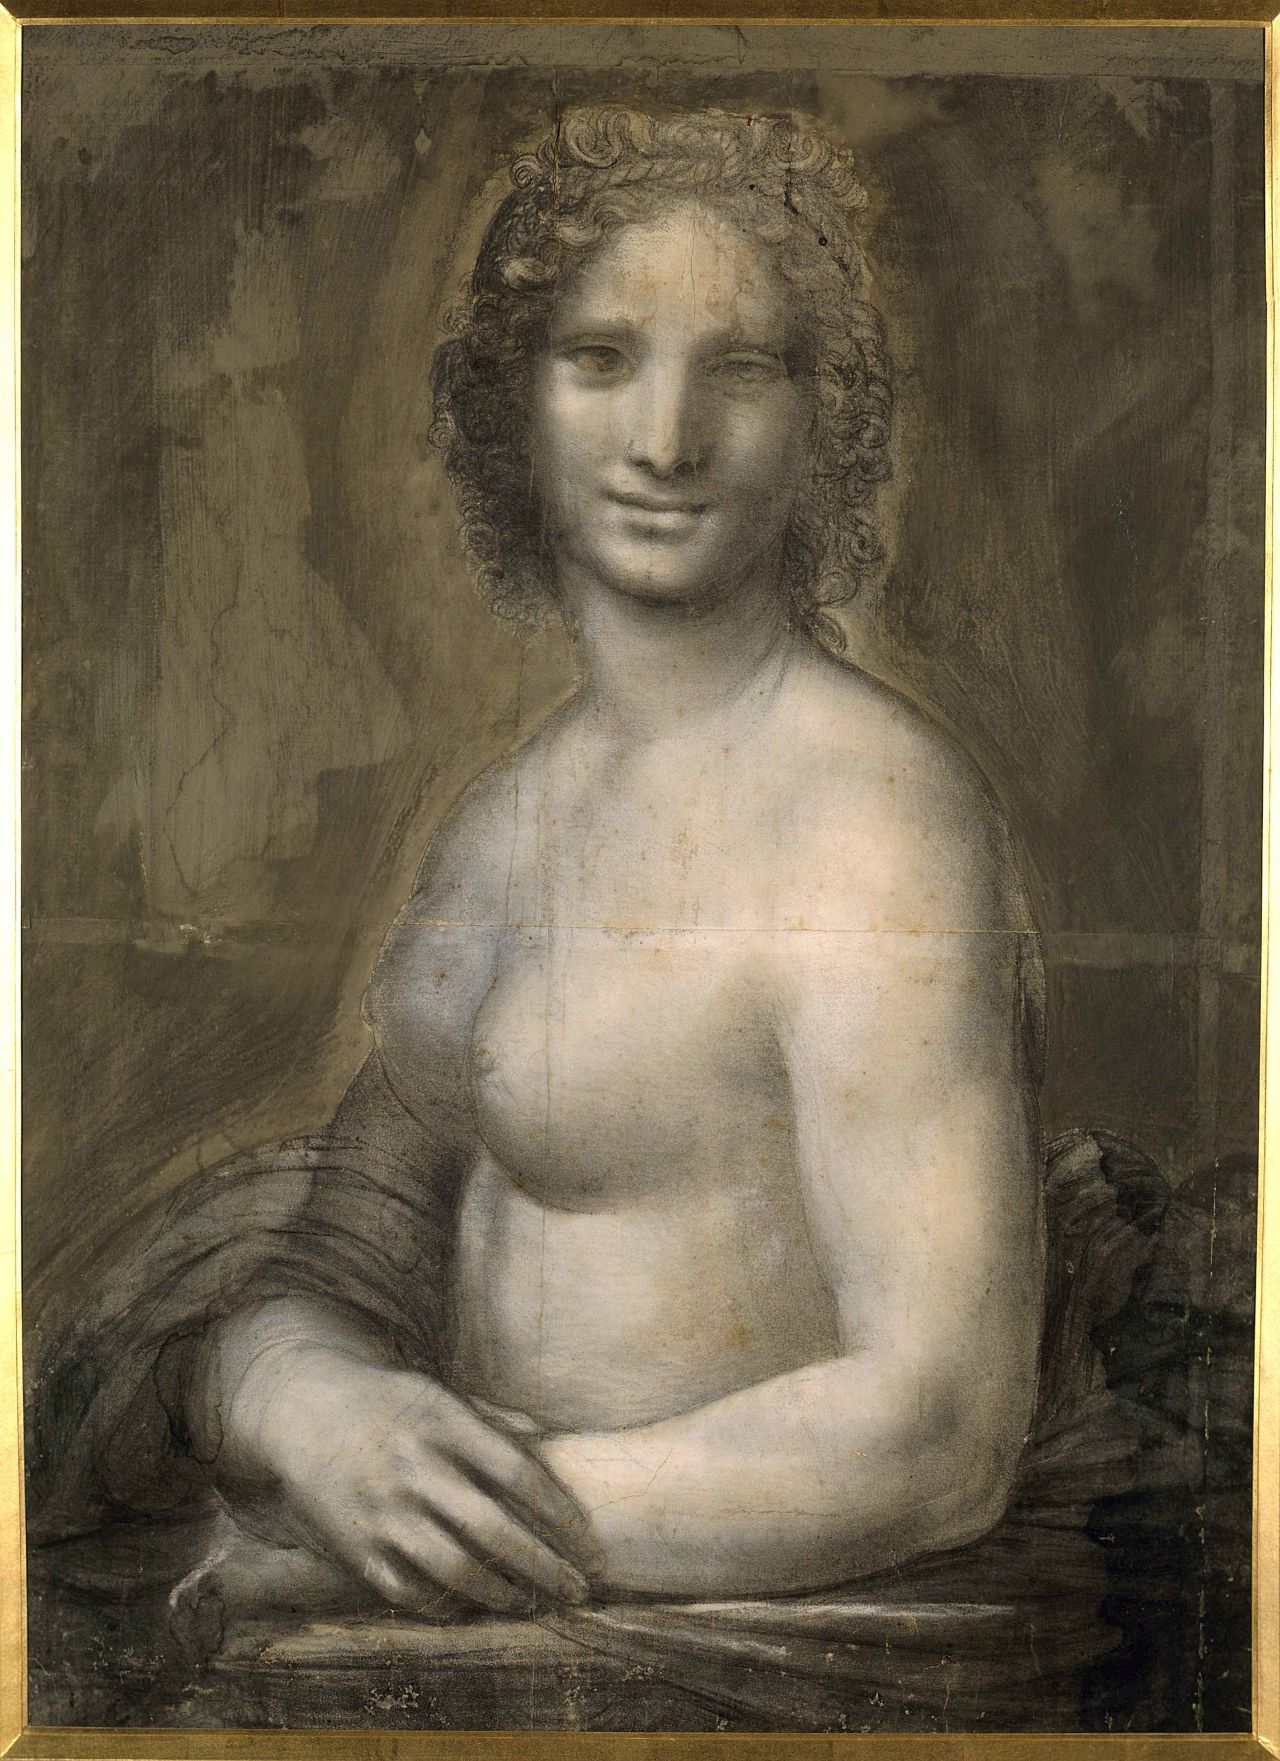 Left-handed charcoal marks hint at da Vinci's involvement.